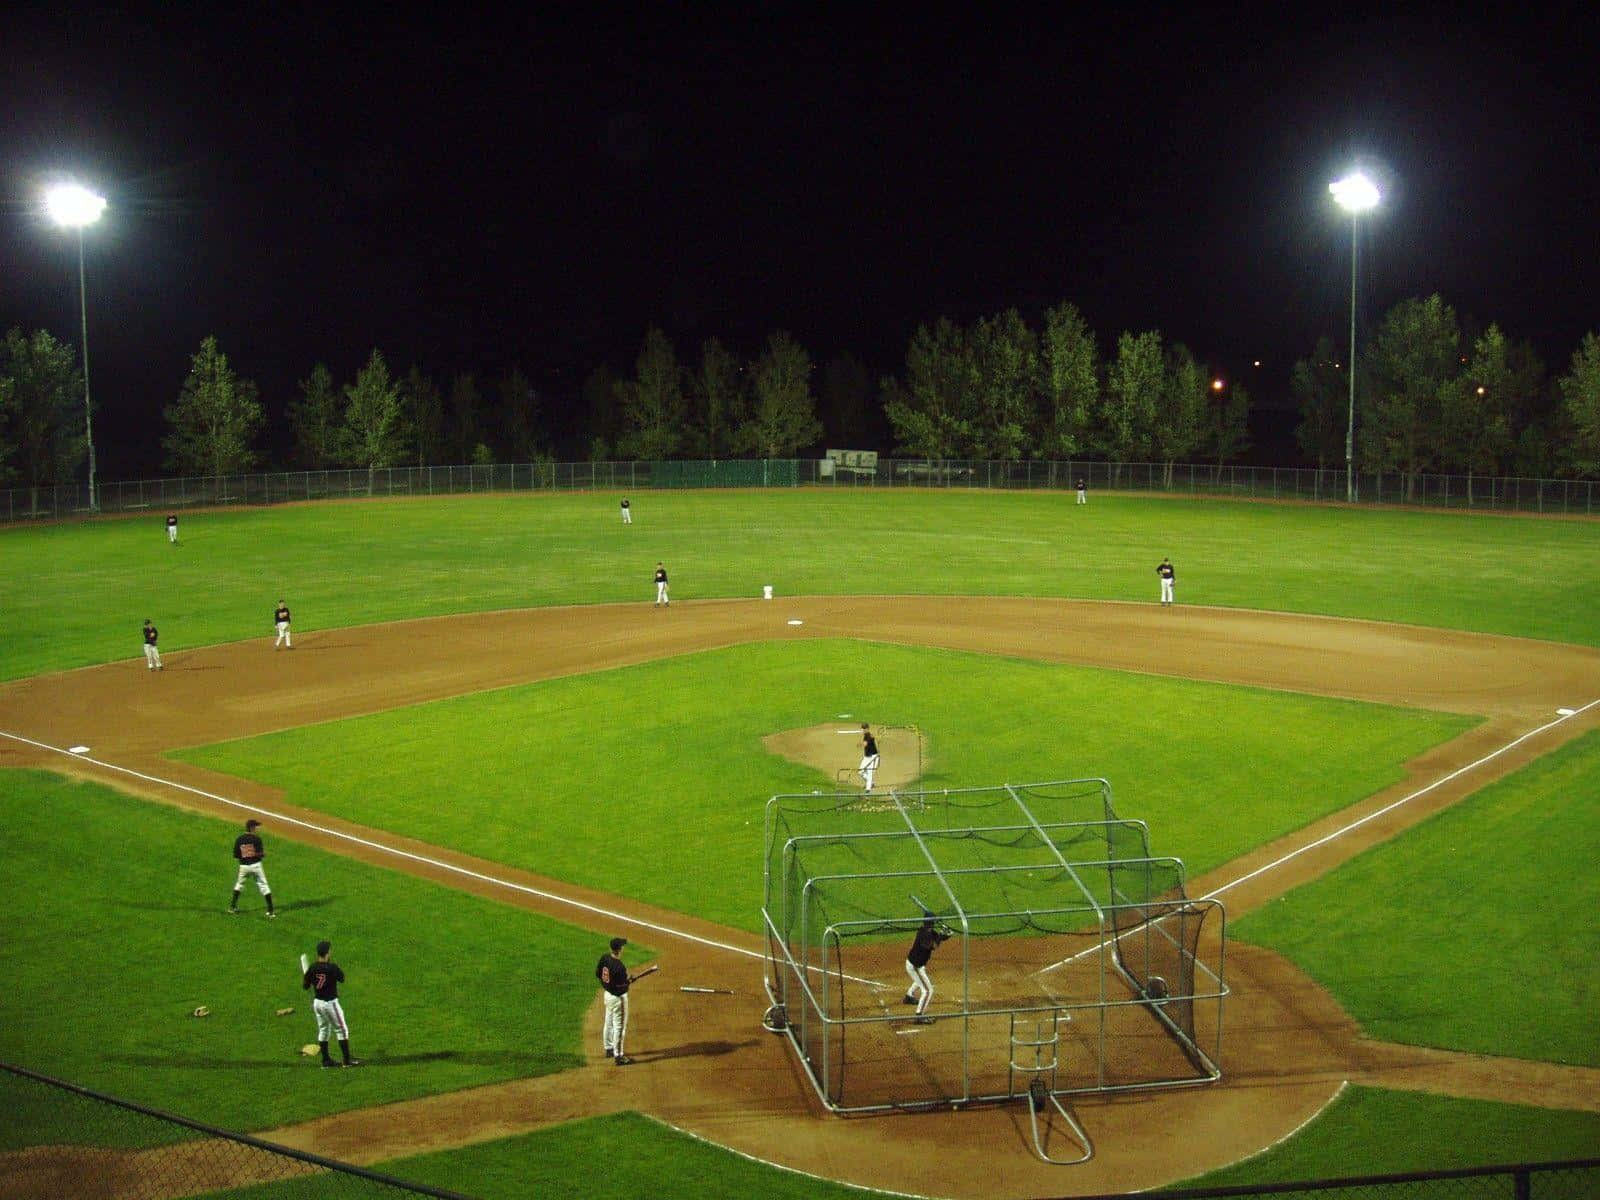 Green Baseball Field And Baseball Players Background